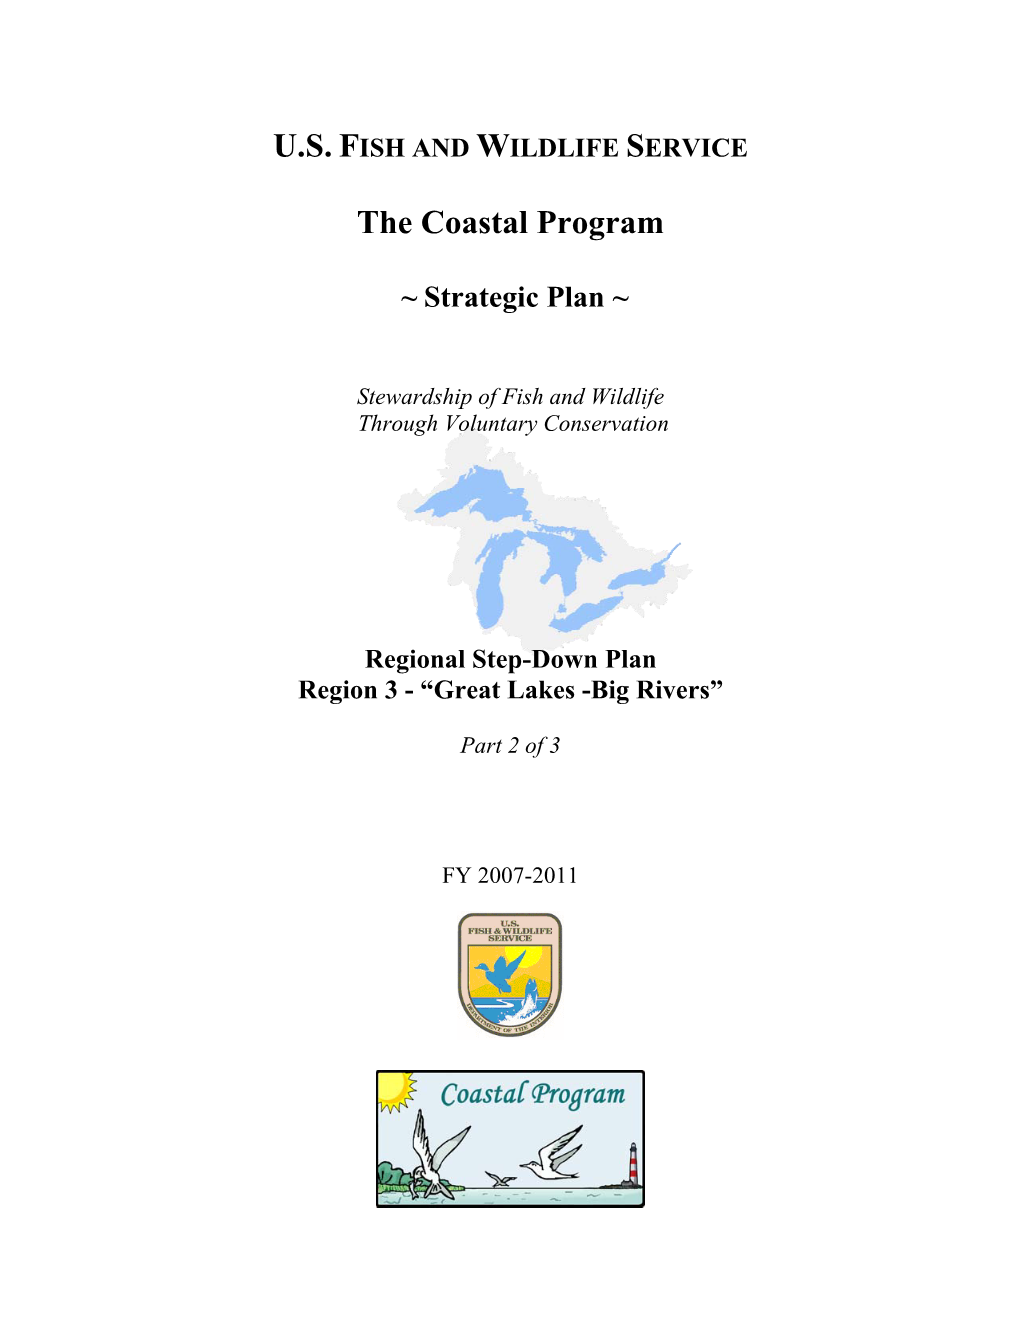 Great Lakes Coastal Program Strategic Plan